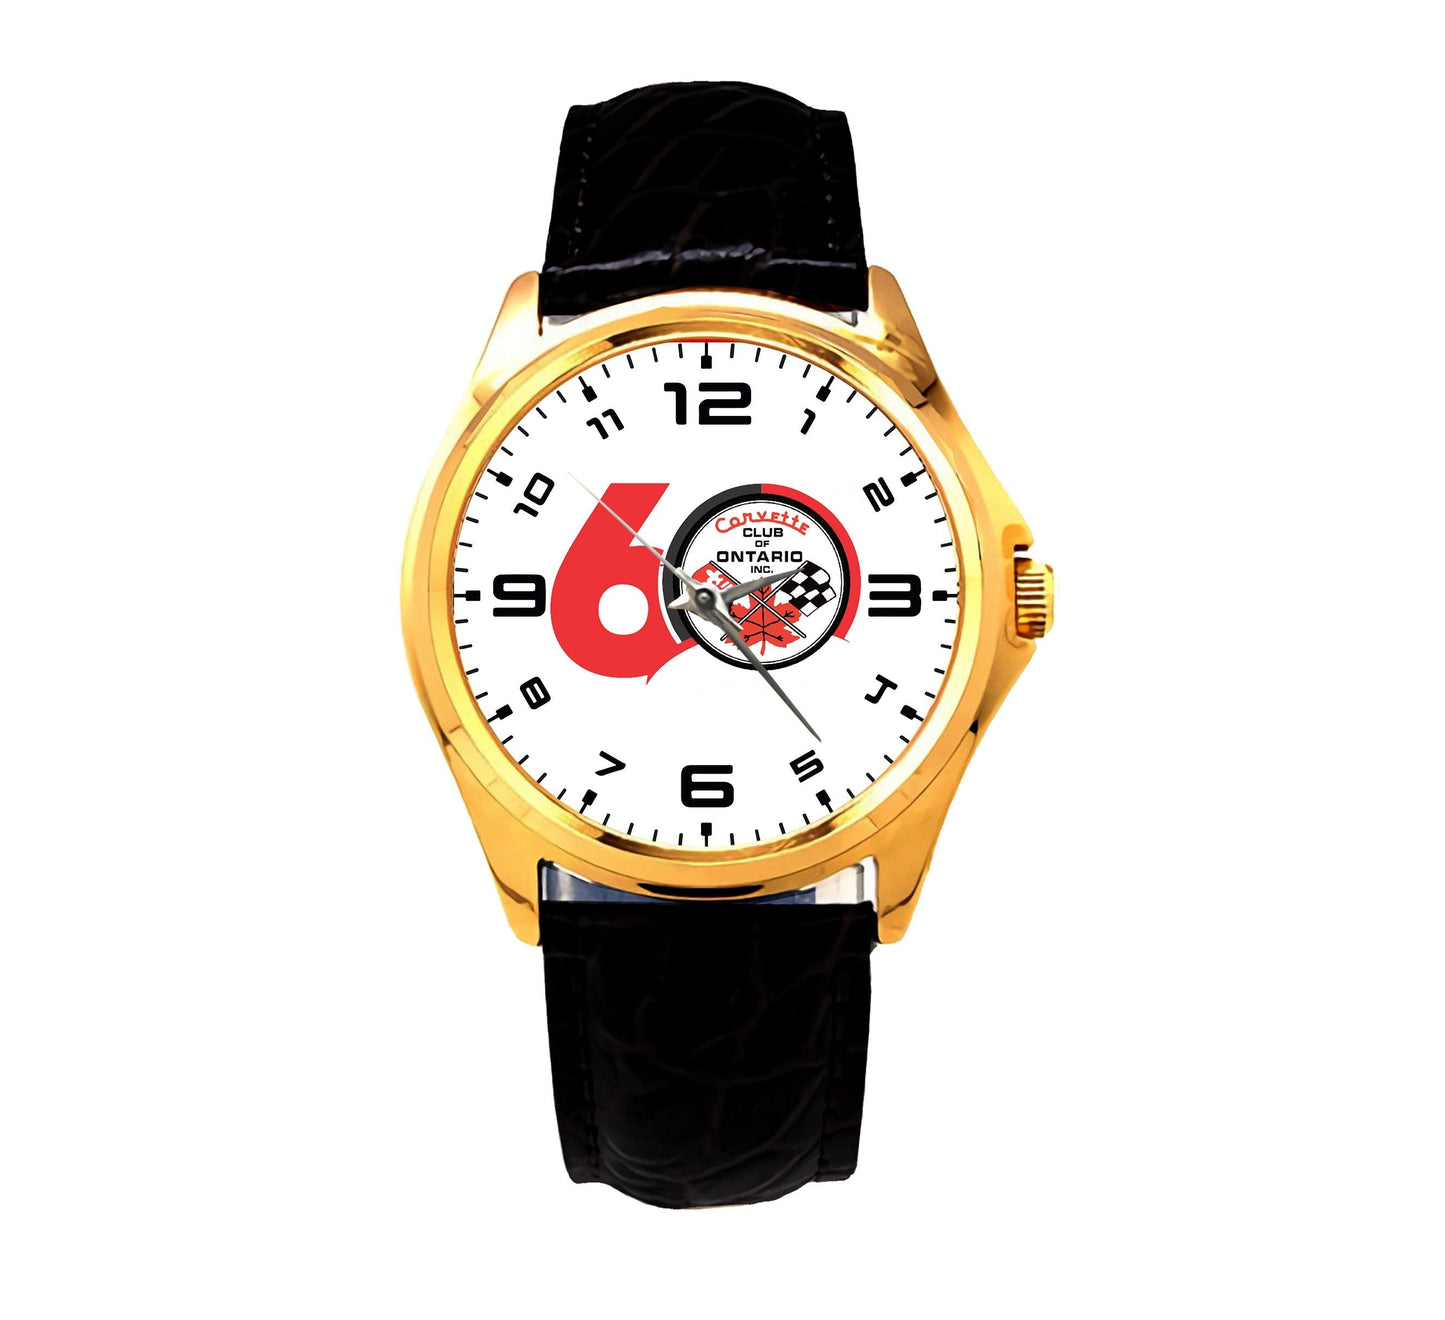 Corvette Club Of Ontario 60 Watches Bdk46-A9